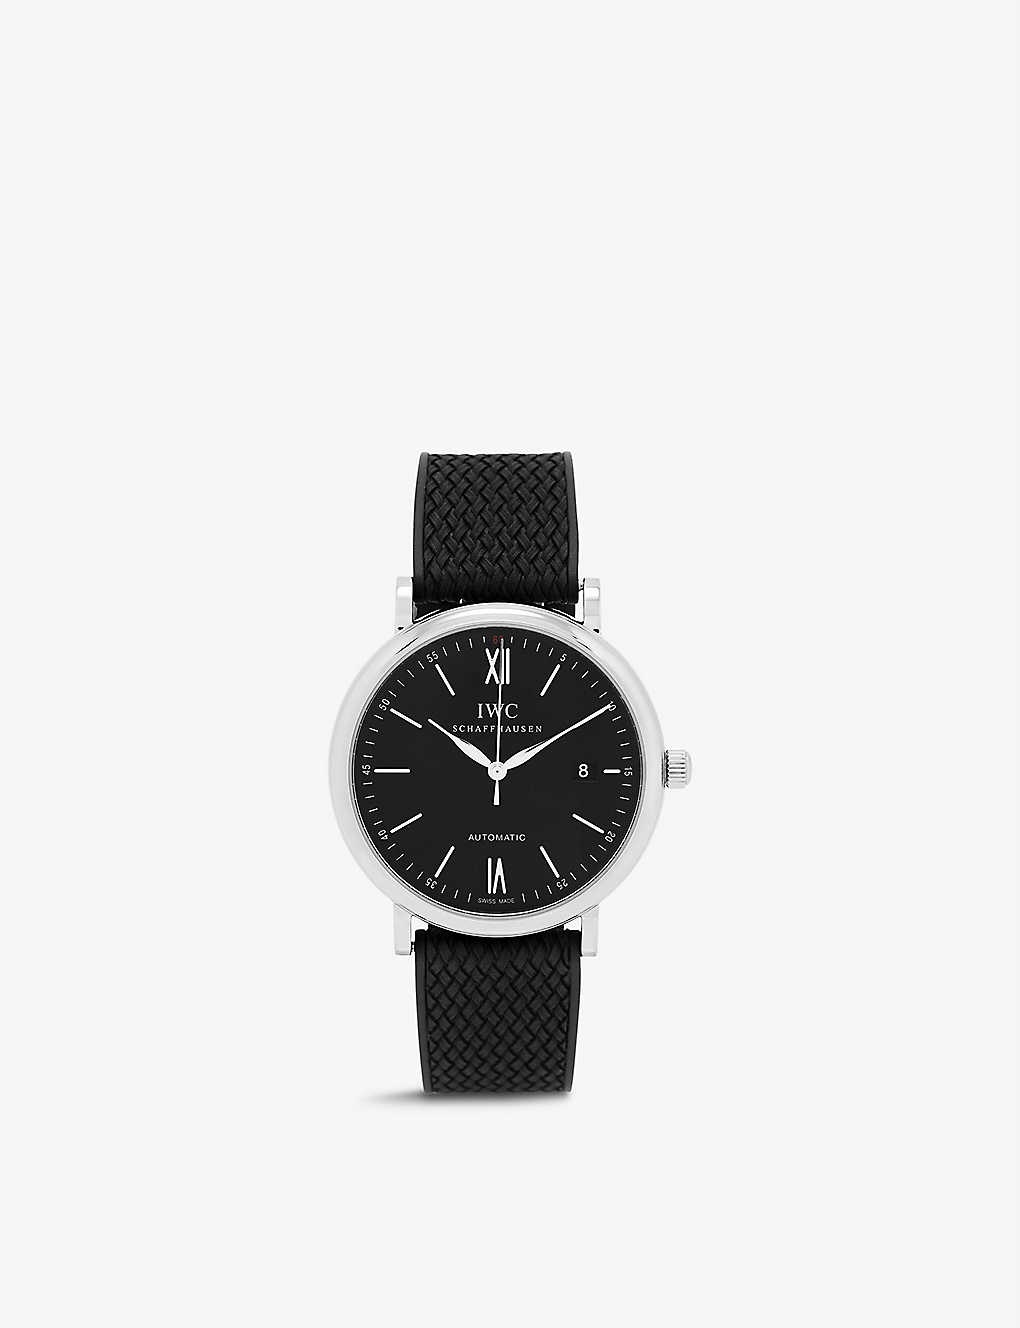 IW356502 Portofino stainless steel automatic watch - 1